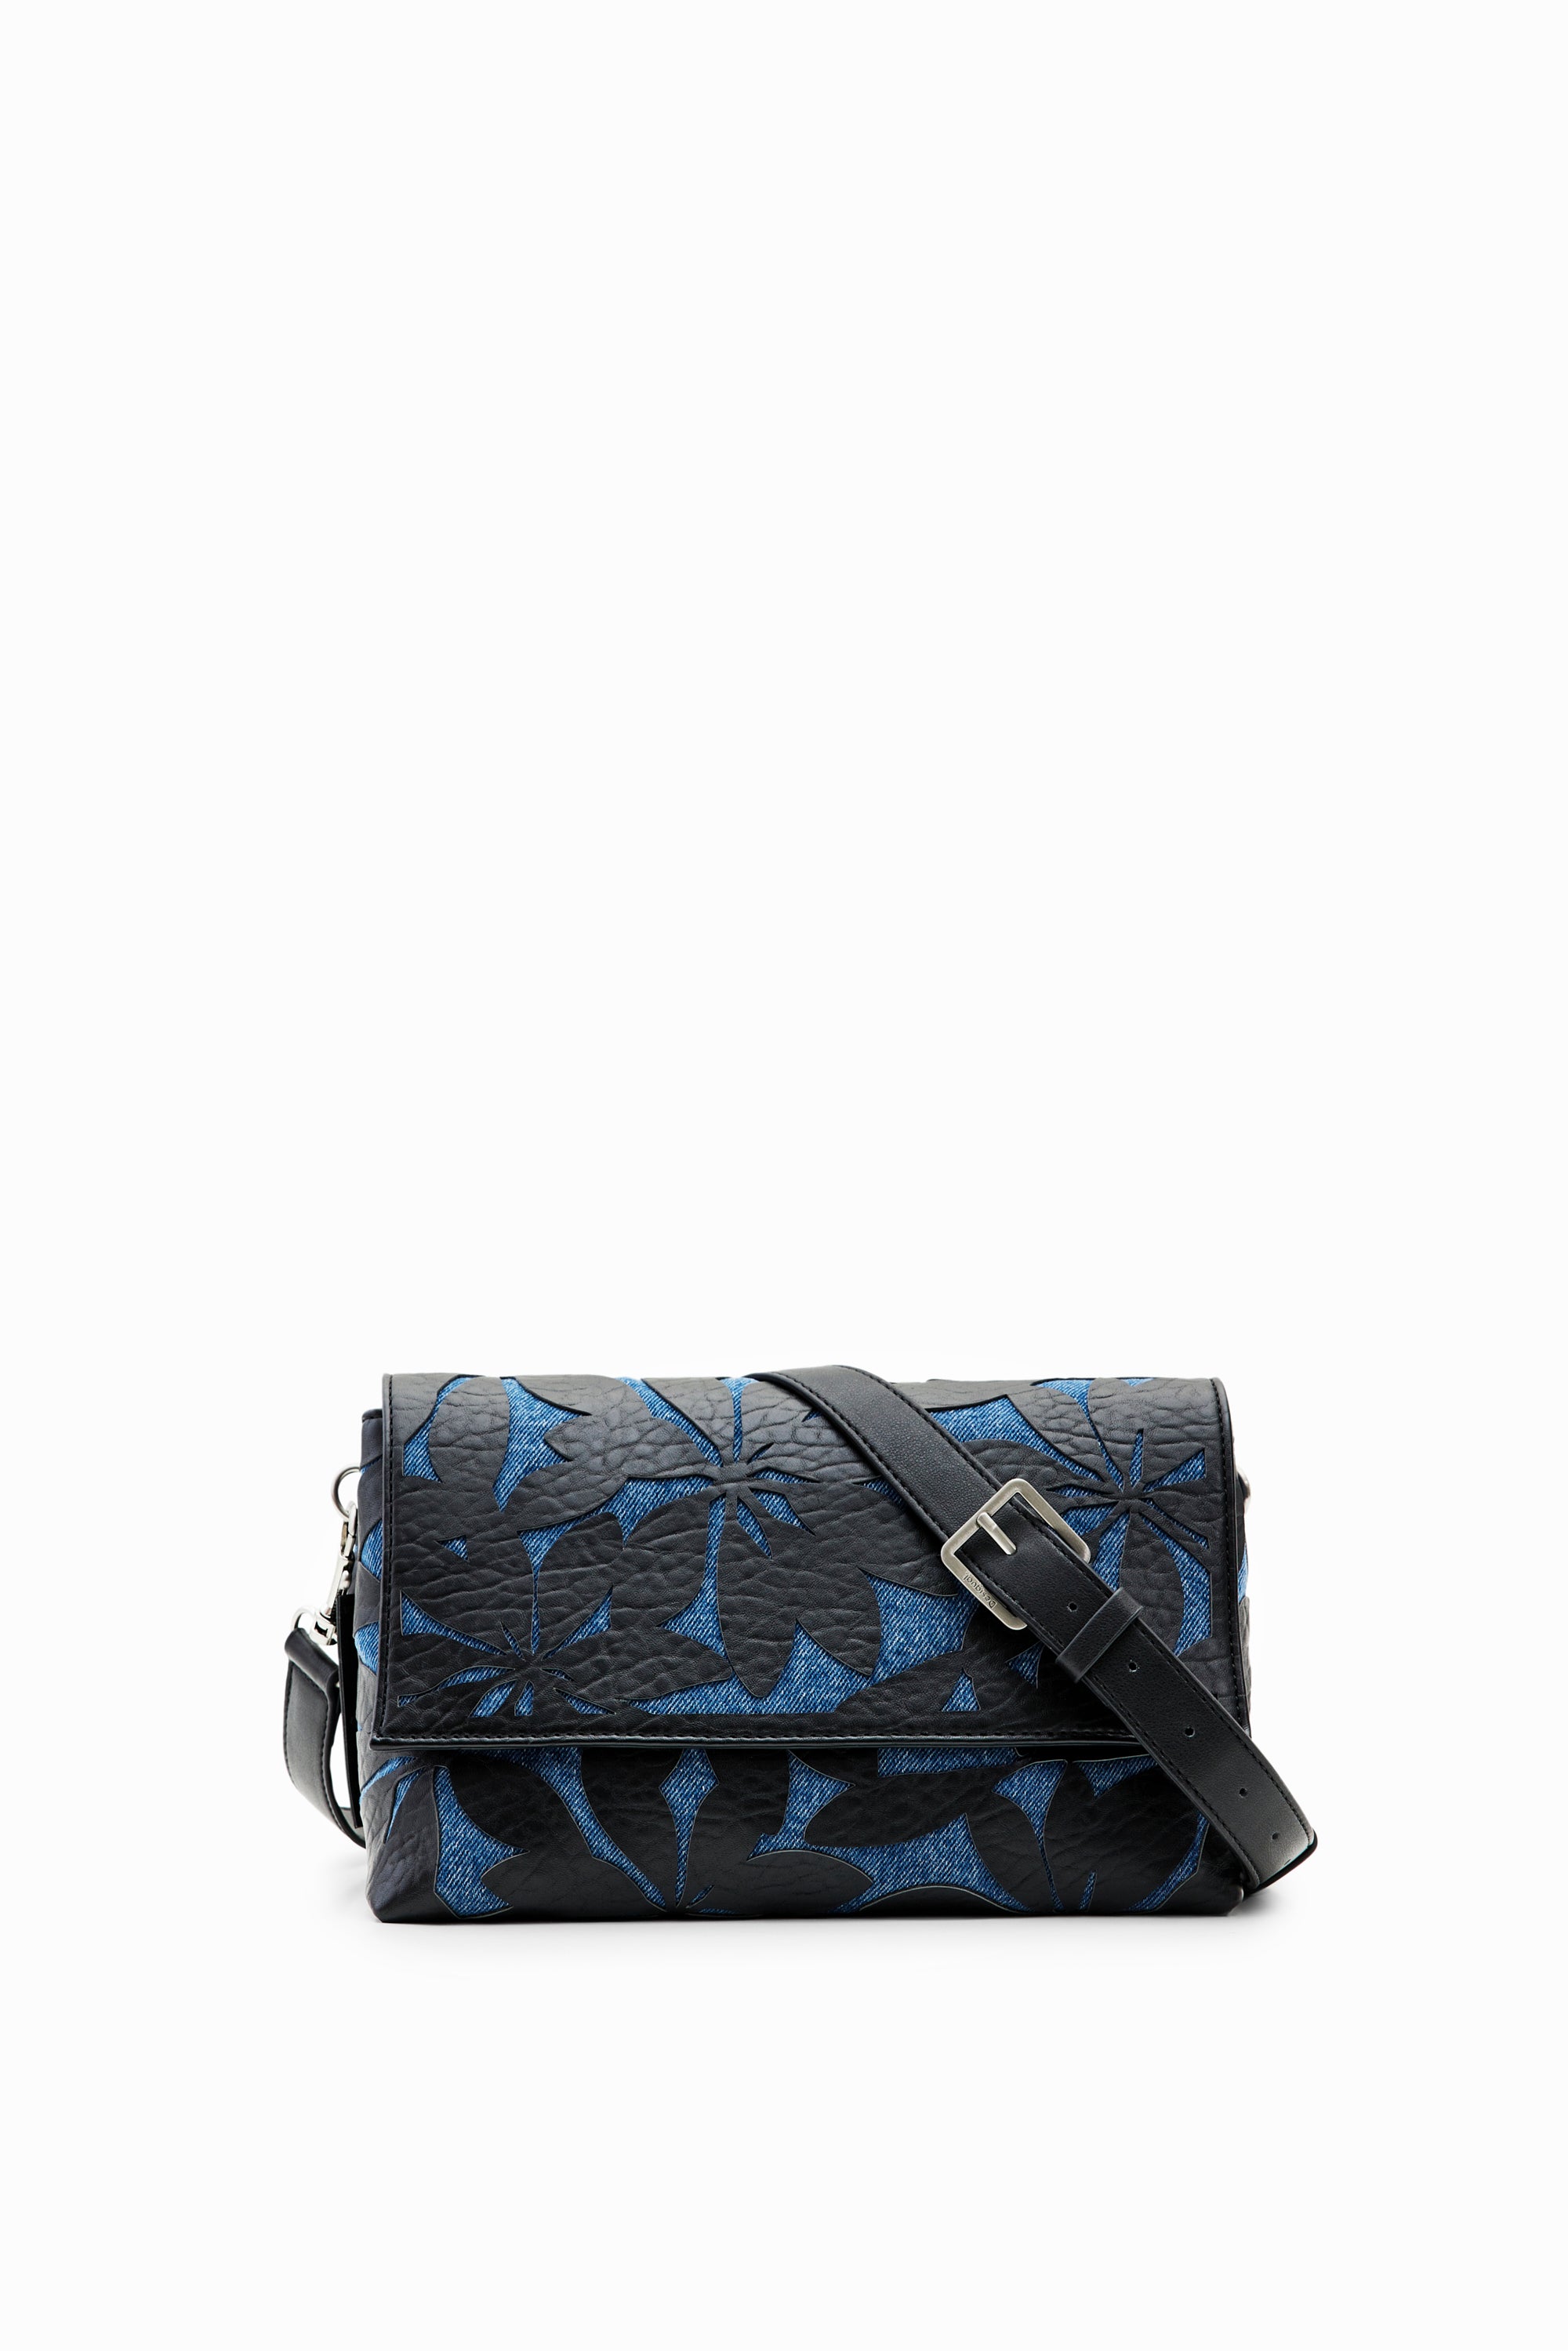 Desigual handbag 23WAXP60 Black/Blue